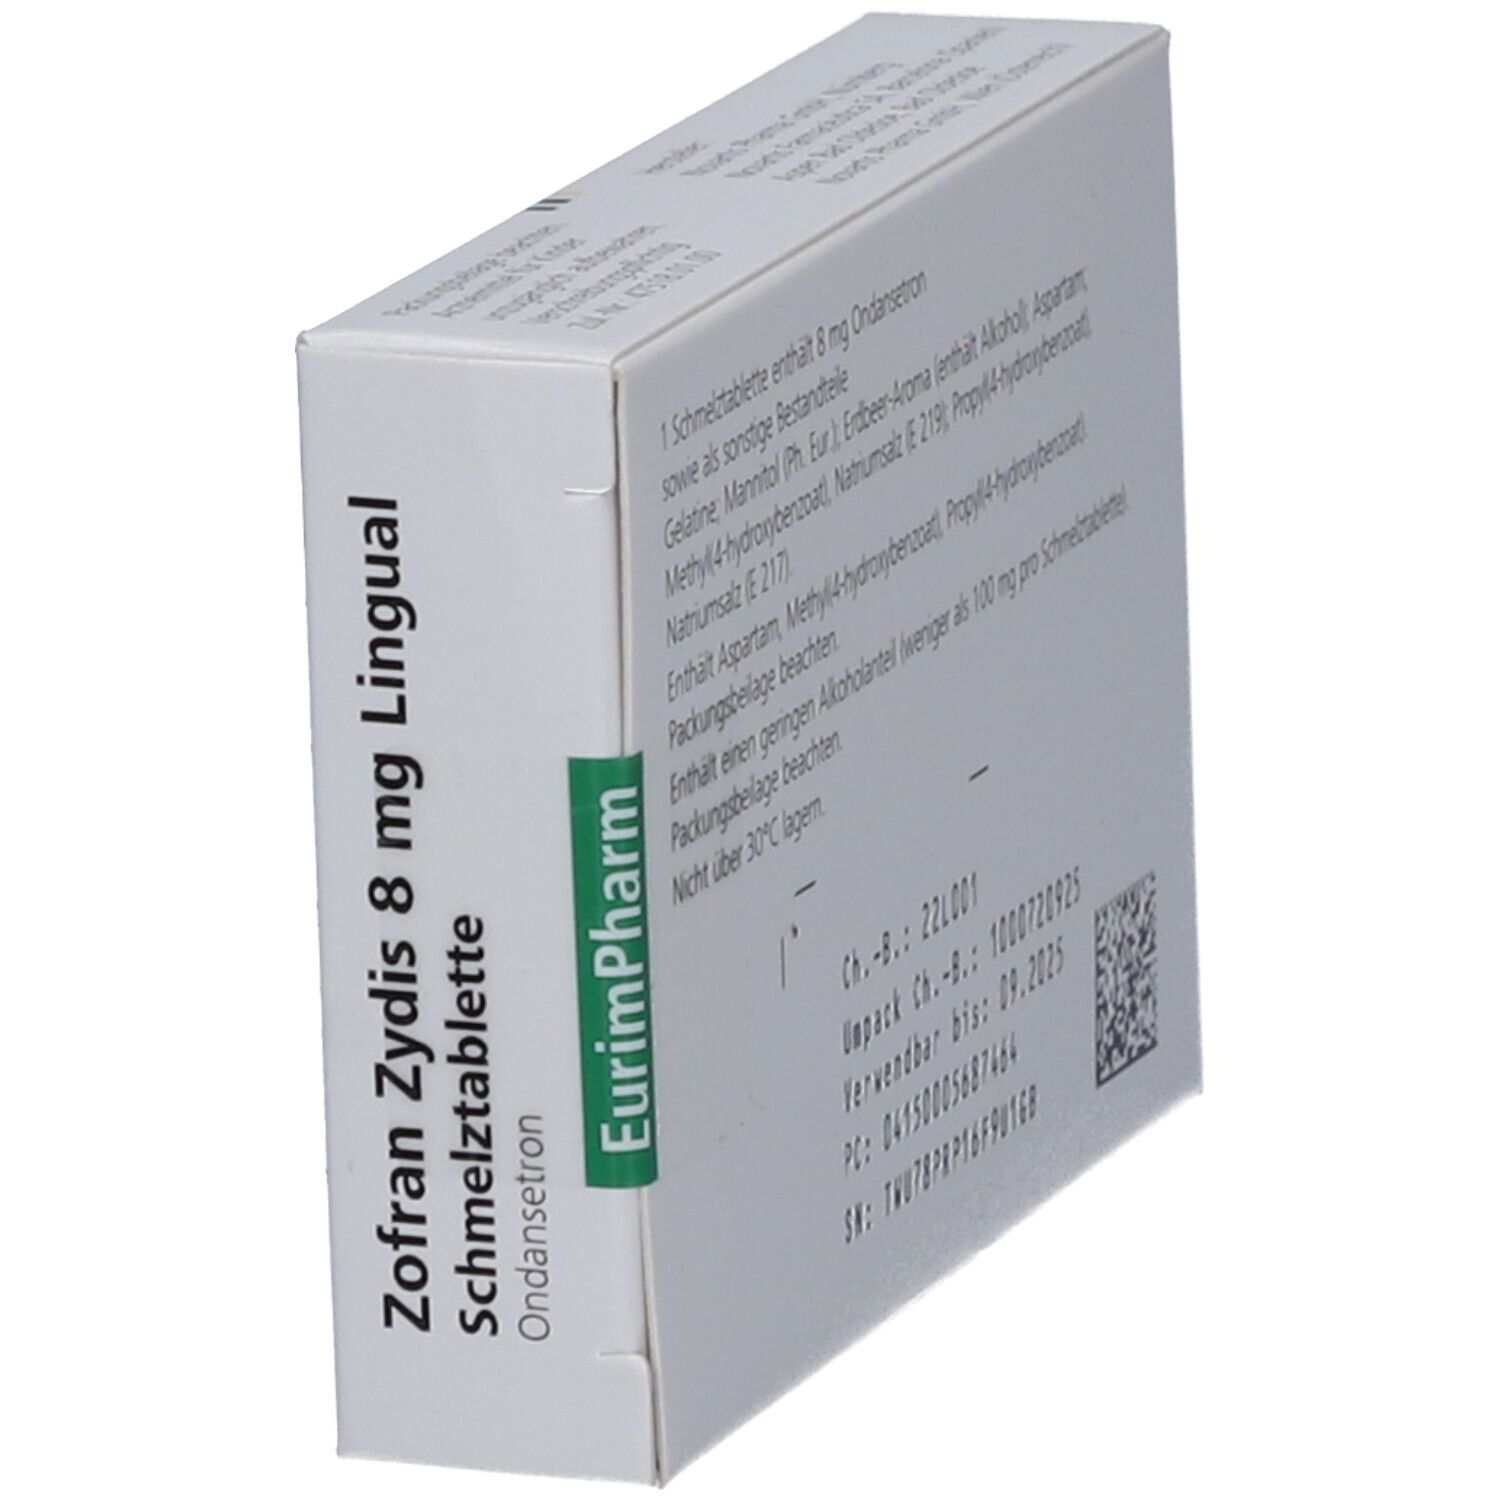 ZOFRAN 8 mg Zydis Lingual Schmelztabletten